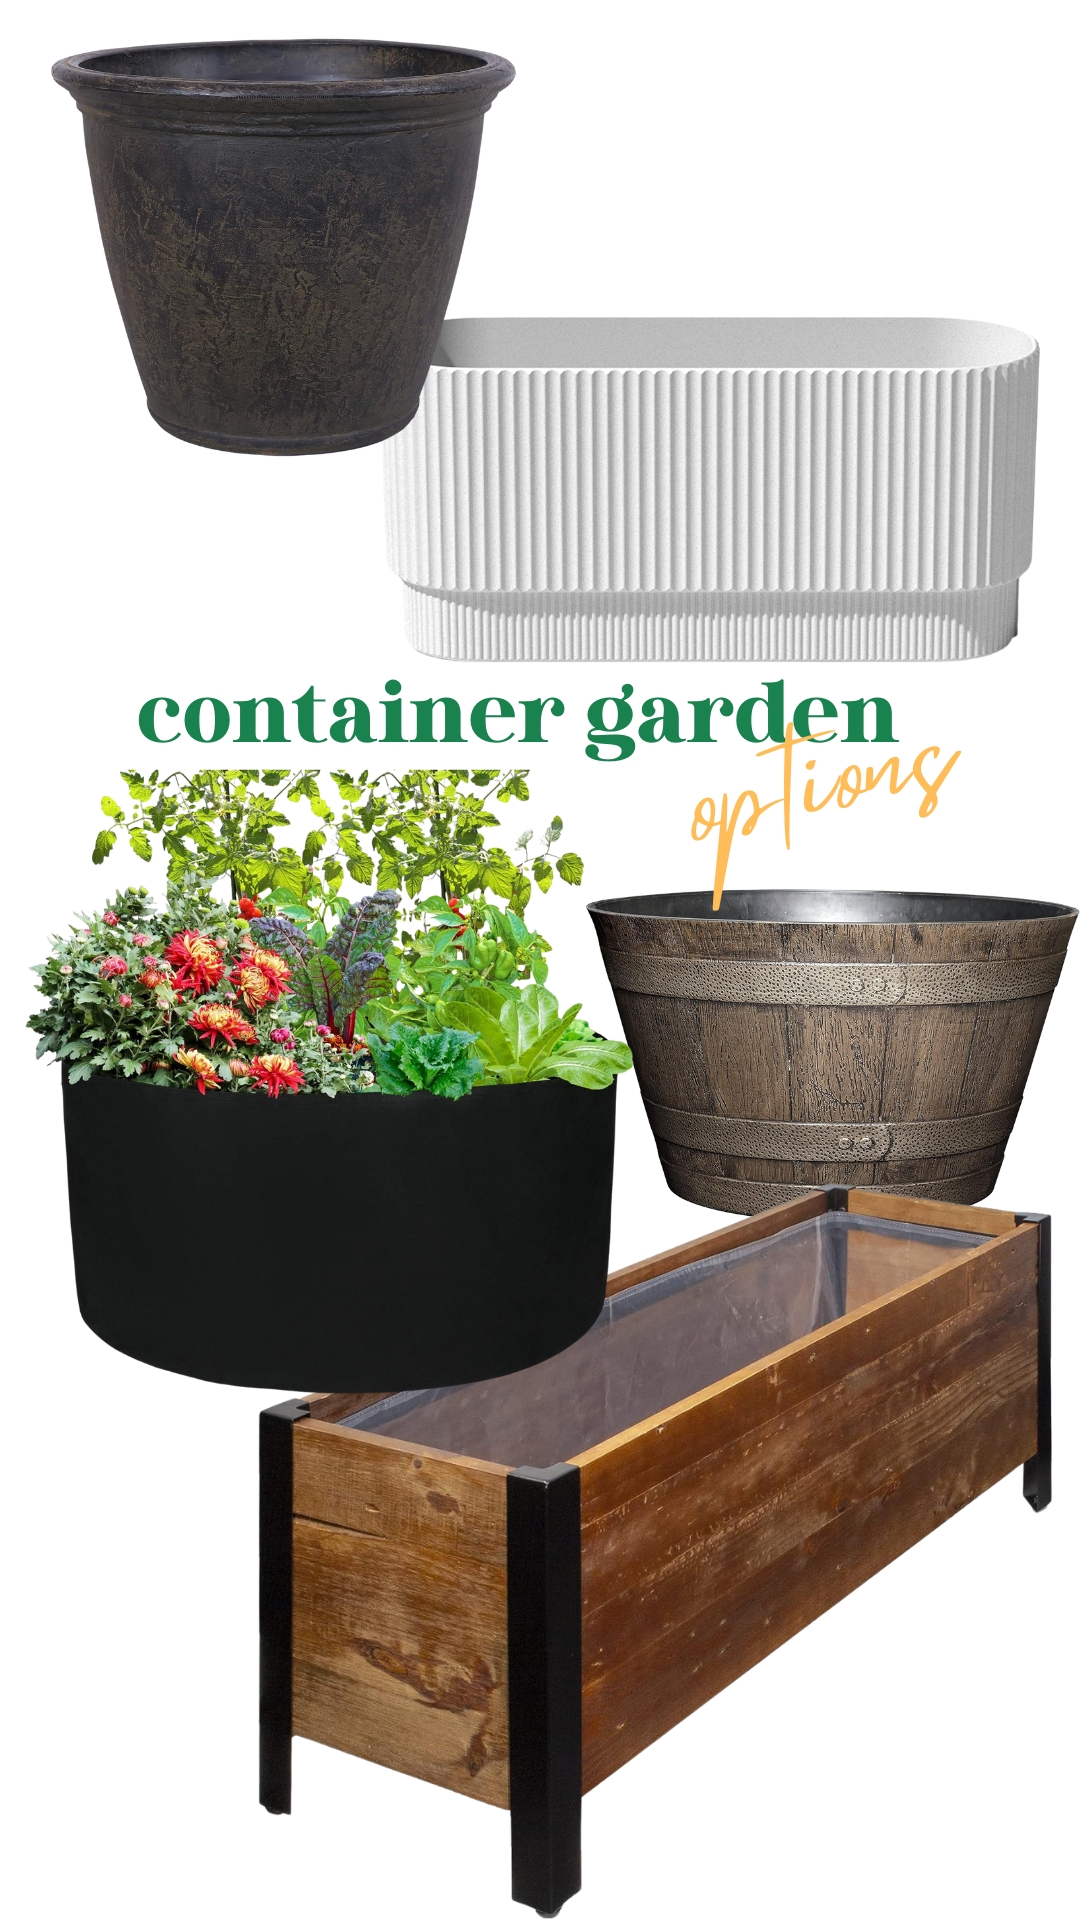 Container Garden Planter Options